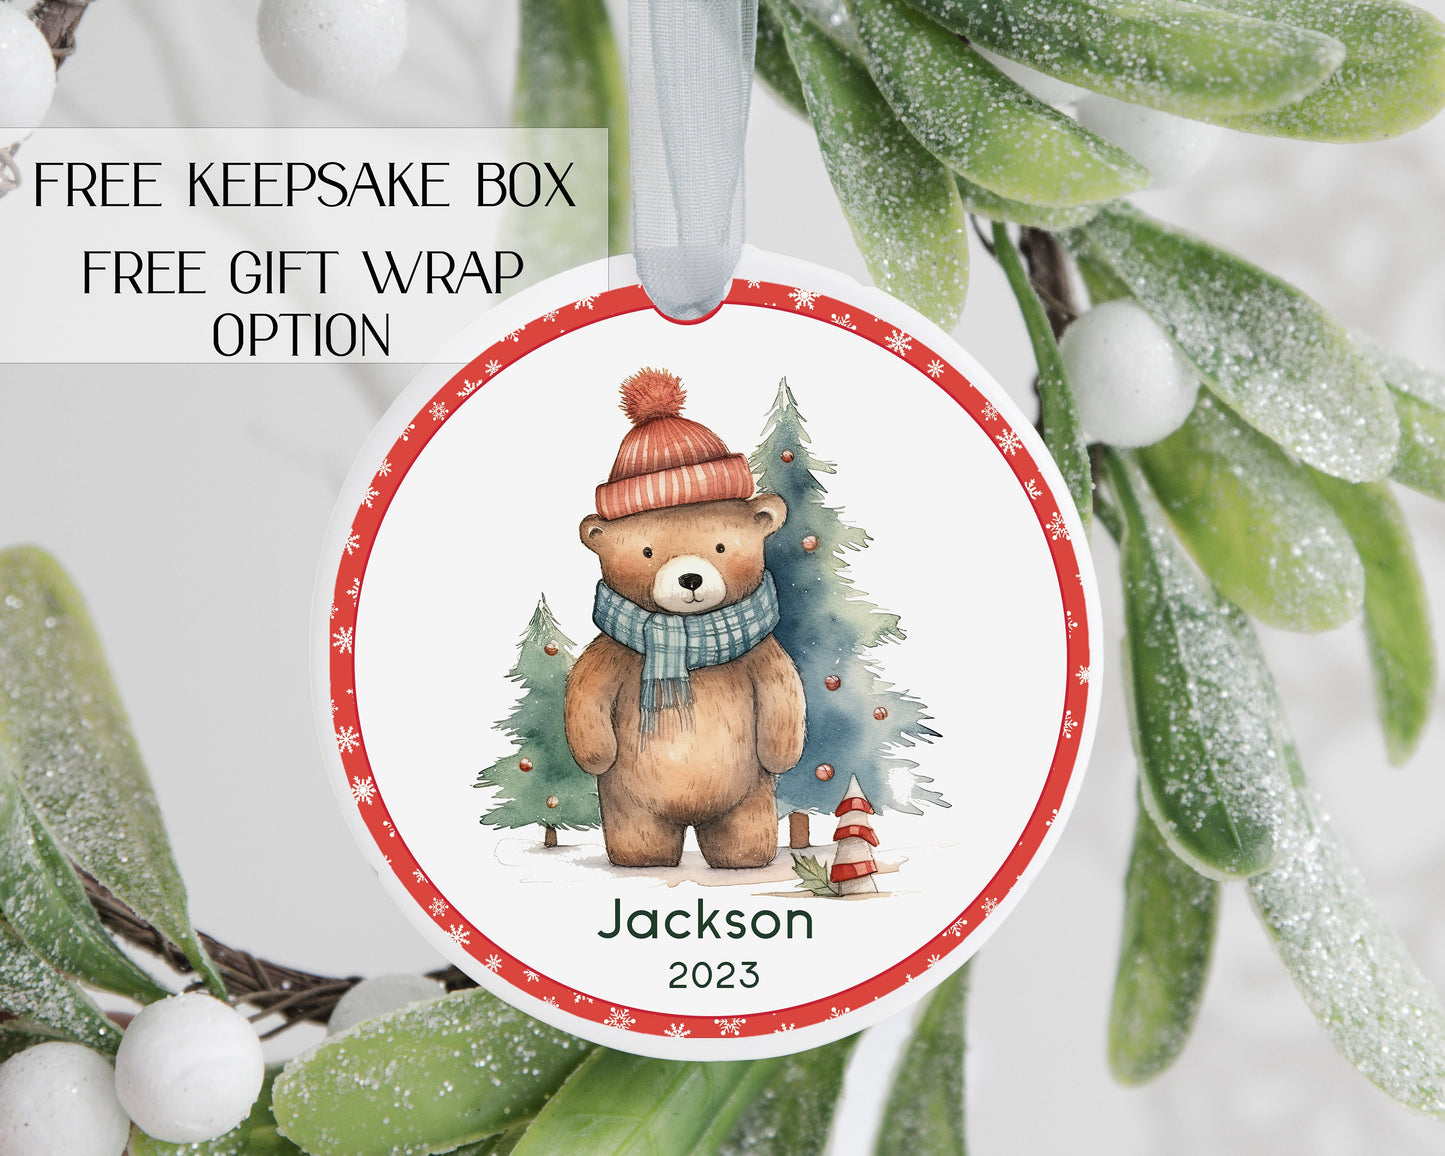 Bear ornament - Bear Christmas ornament - Ceramic bear  ornament - Teddy bear ornament - personalized bear ornament